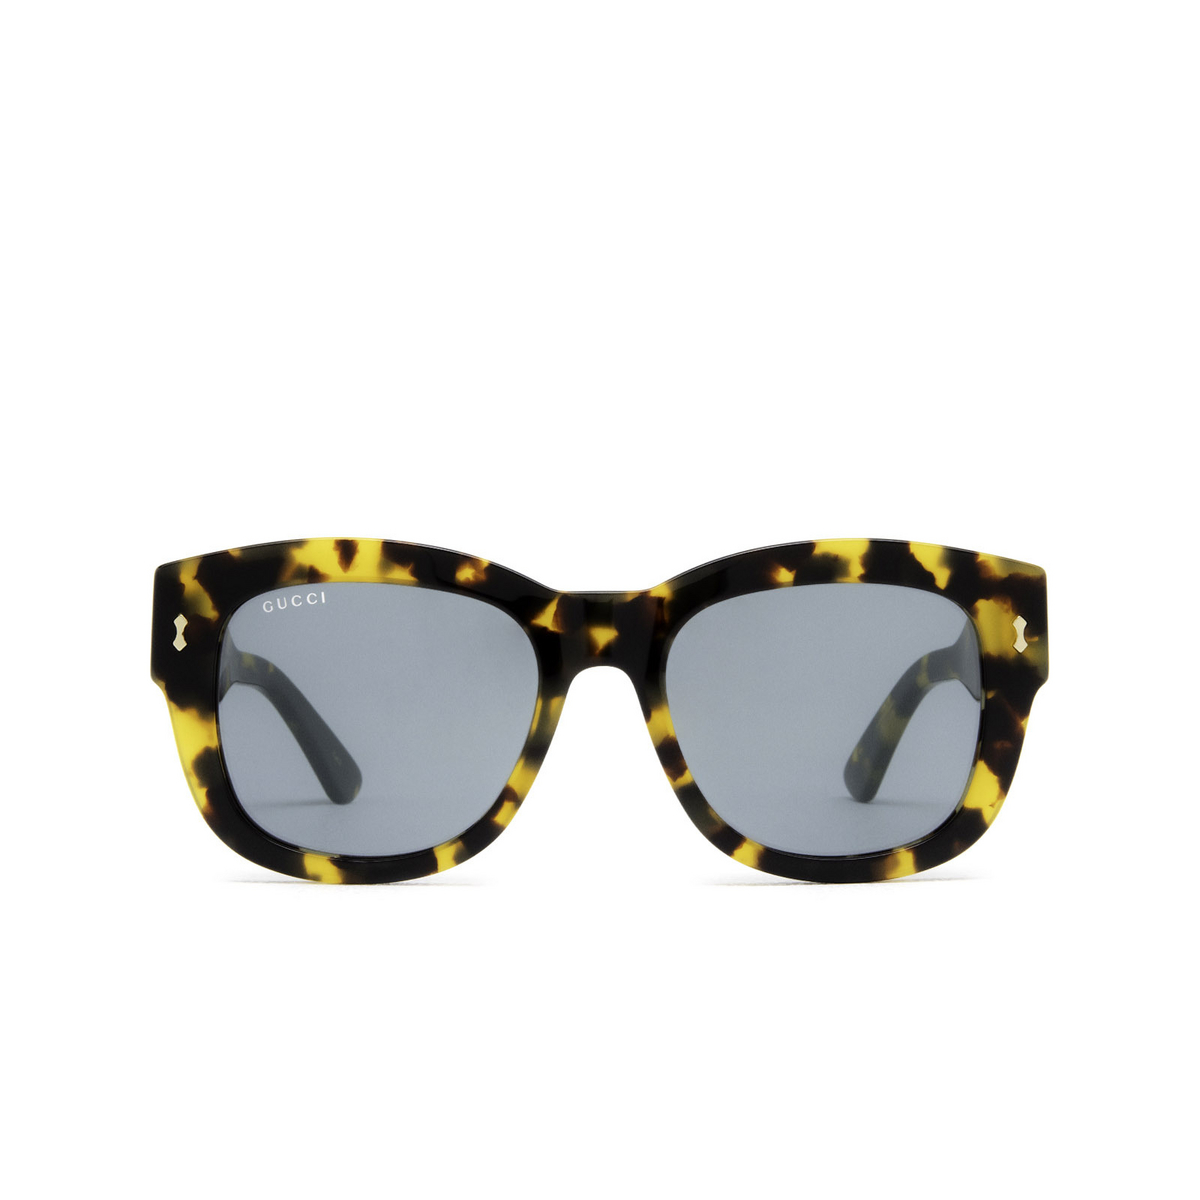 Gucci® Square Sunglasses: GG1110S color Havana 003 - front view.